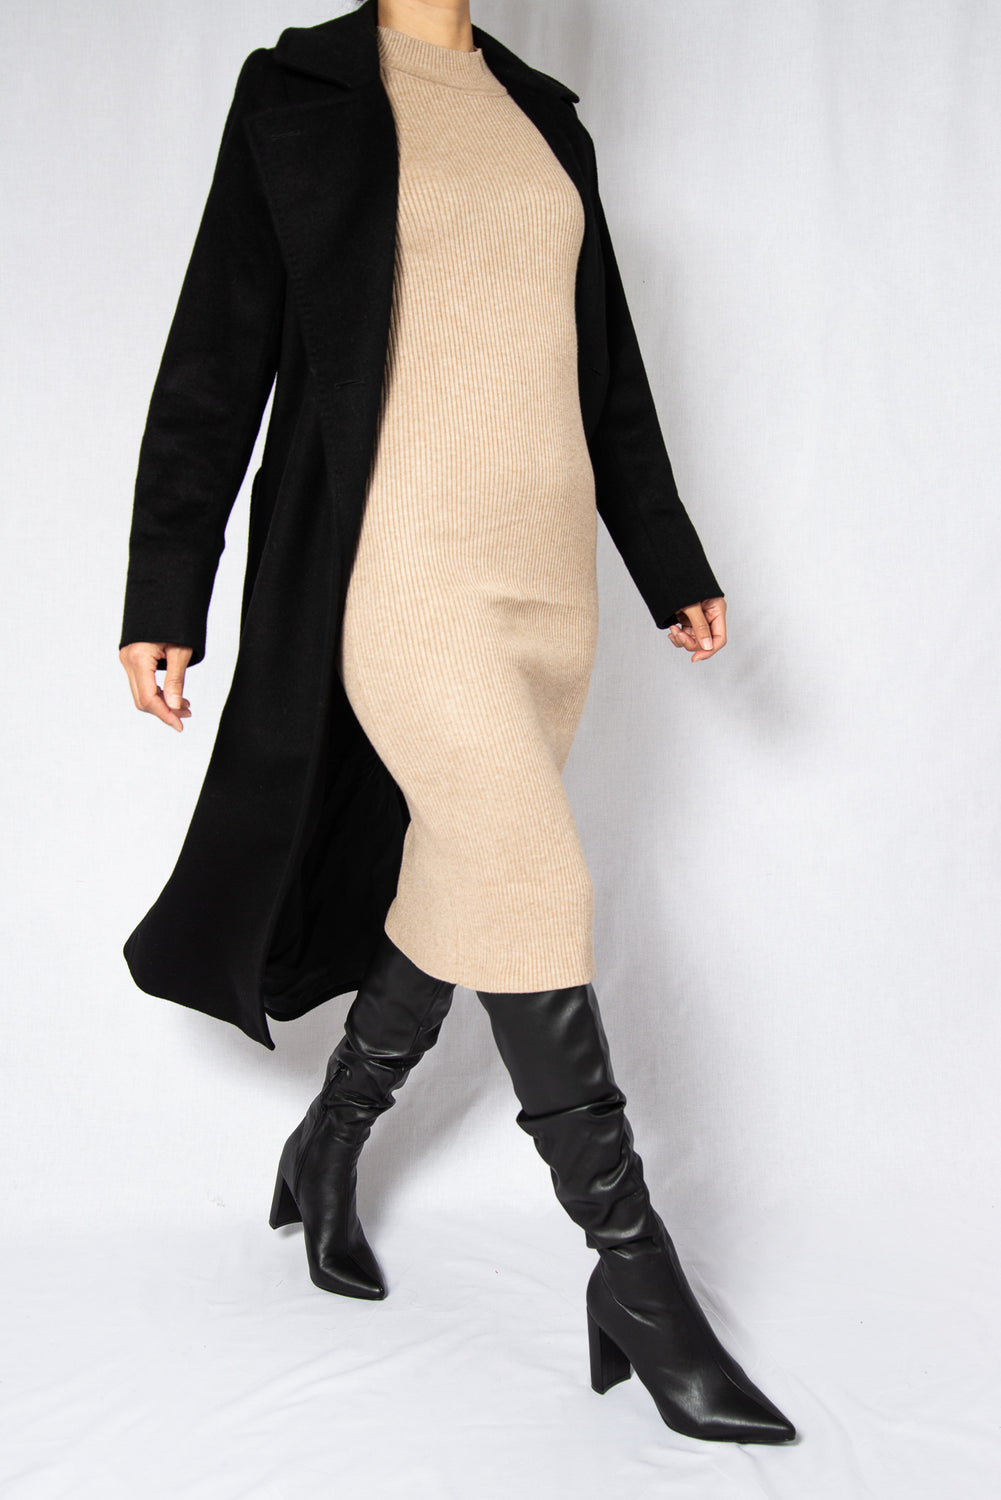 MODZ Beige Rib Long Sleeves Midi Dress Modest Knee-Length High Neck Dress in Cotton